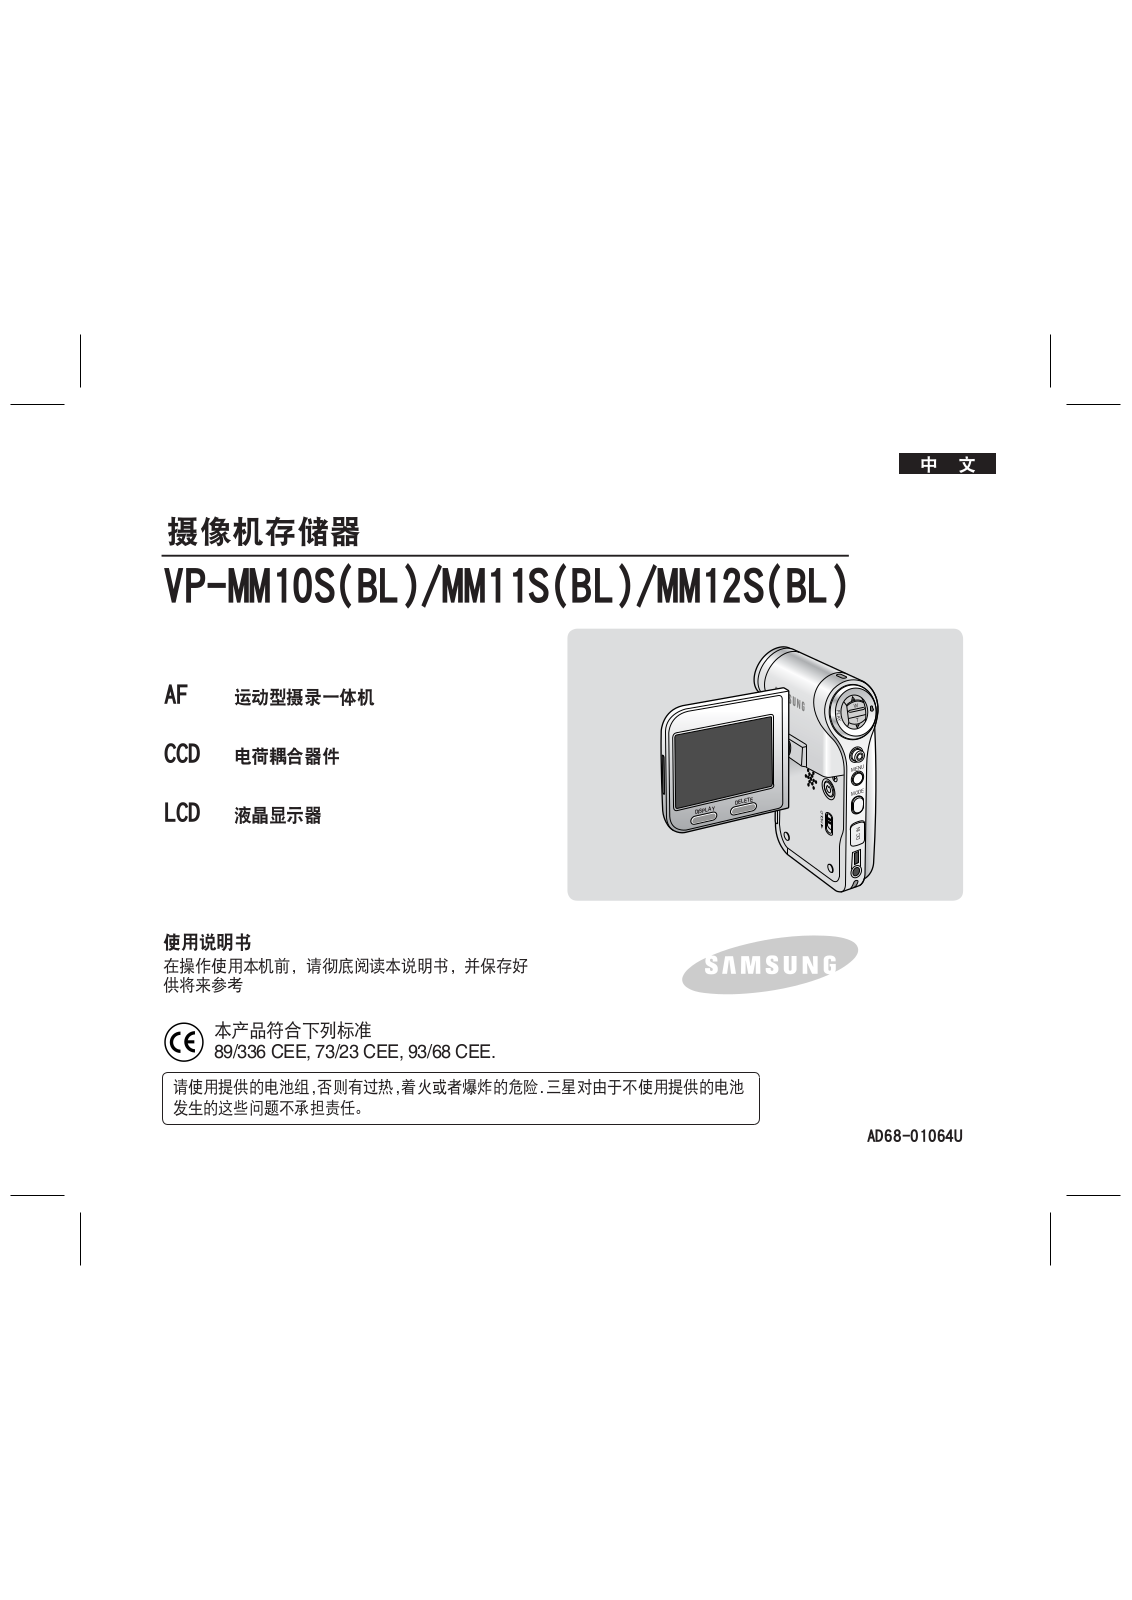 SAMSUNG VP-MM10S, MM11S, MM12S User Manual